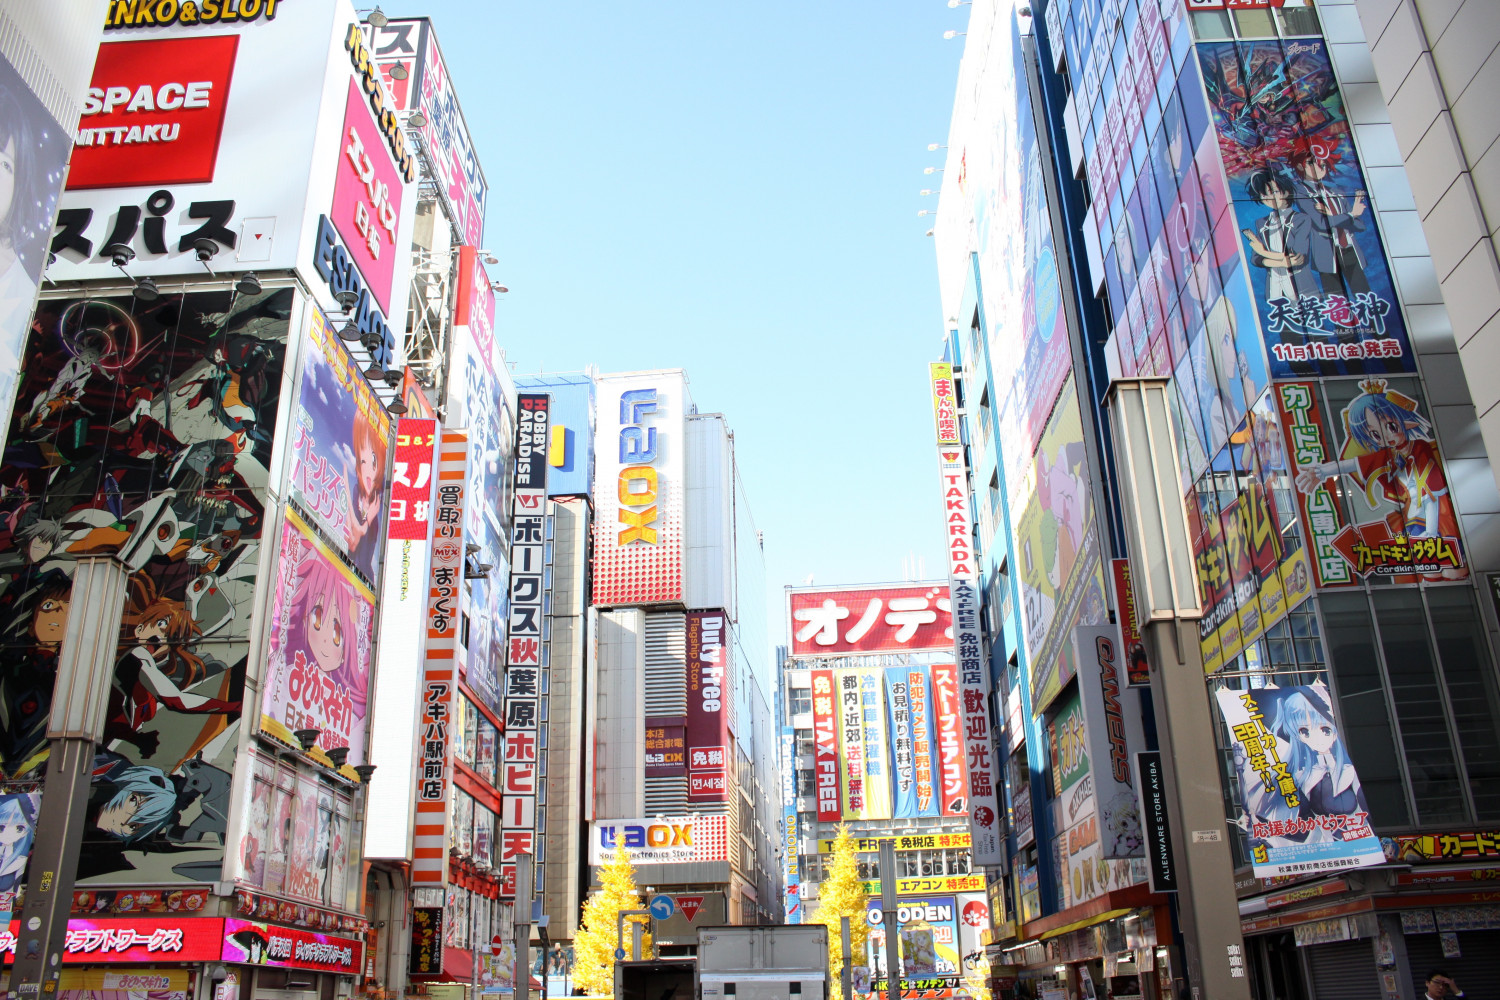 The “17-Year-Old Disease” That Runs Rampant in Akihabara